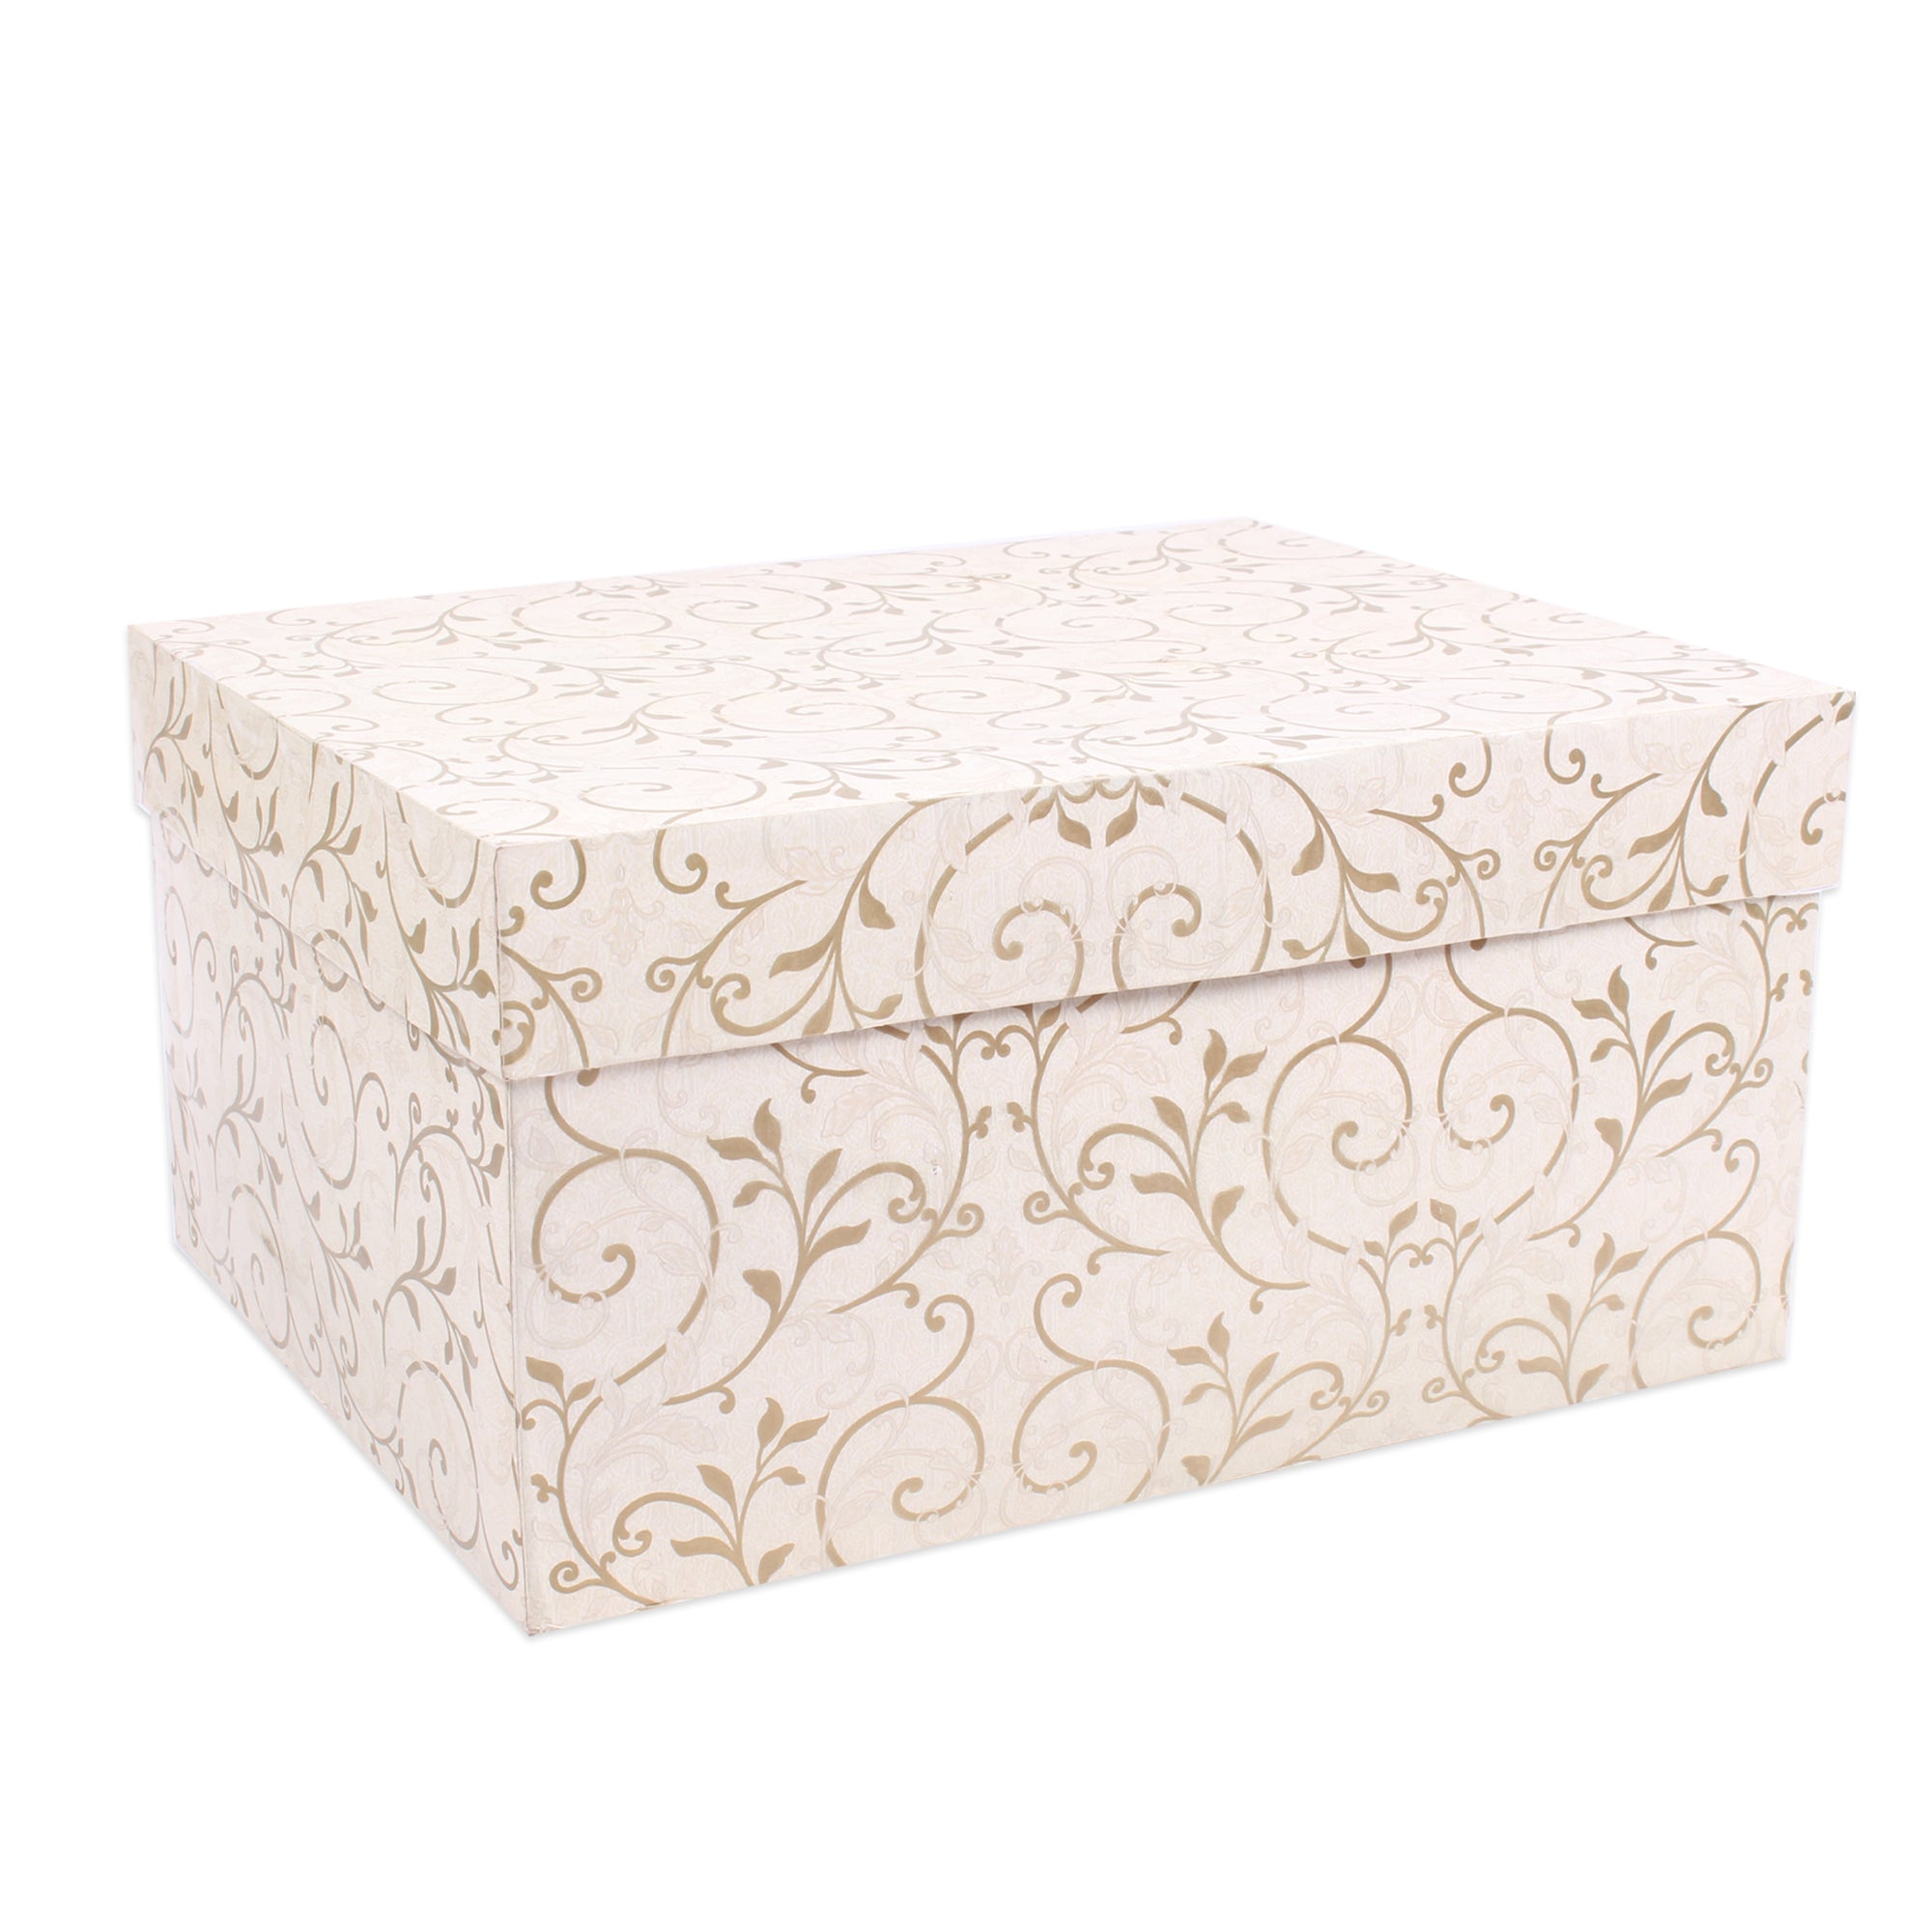 Gift Box Floral Swirls Ivory Shimmer L25.5 X W20.5 X D13Cm 1Pc Gol